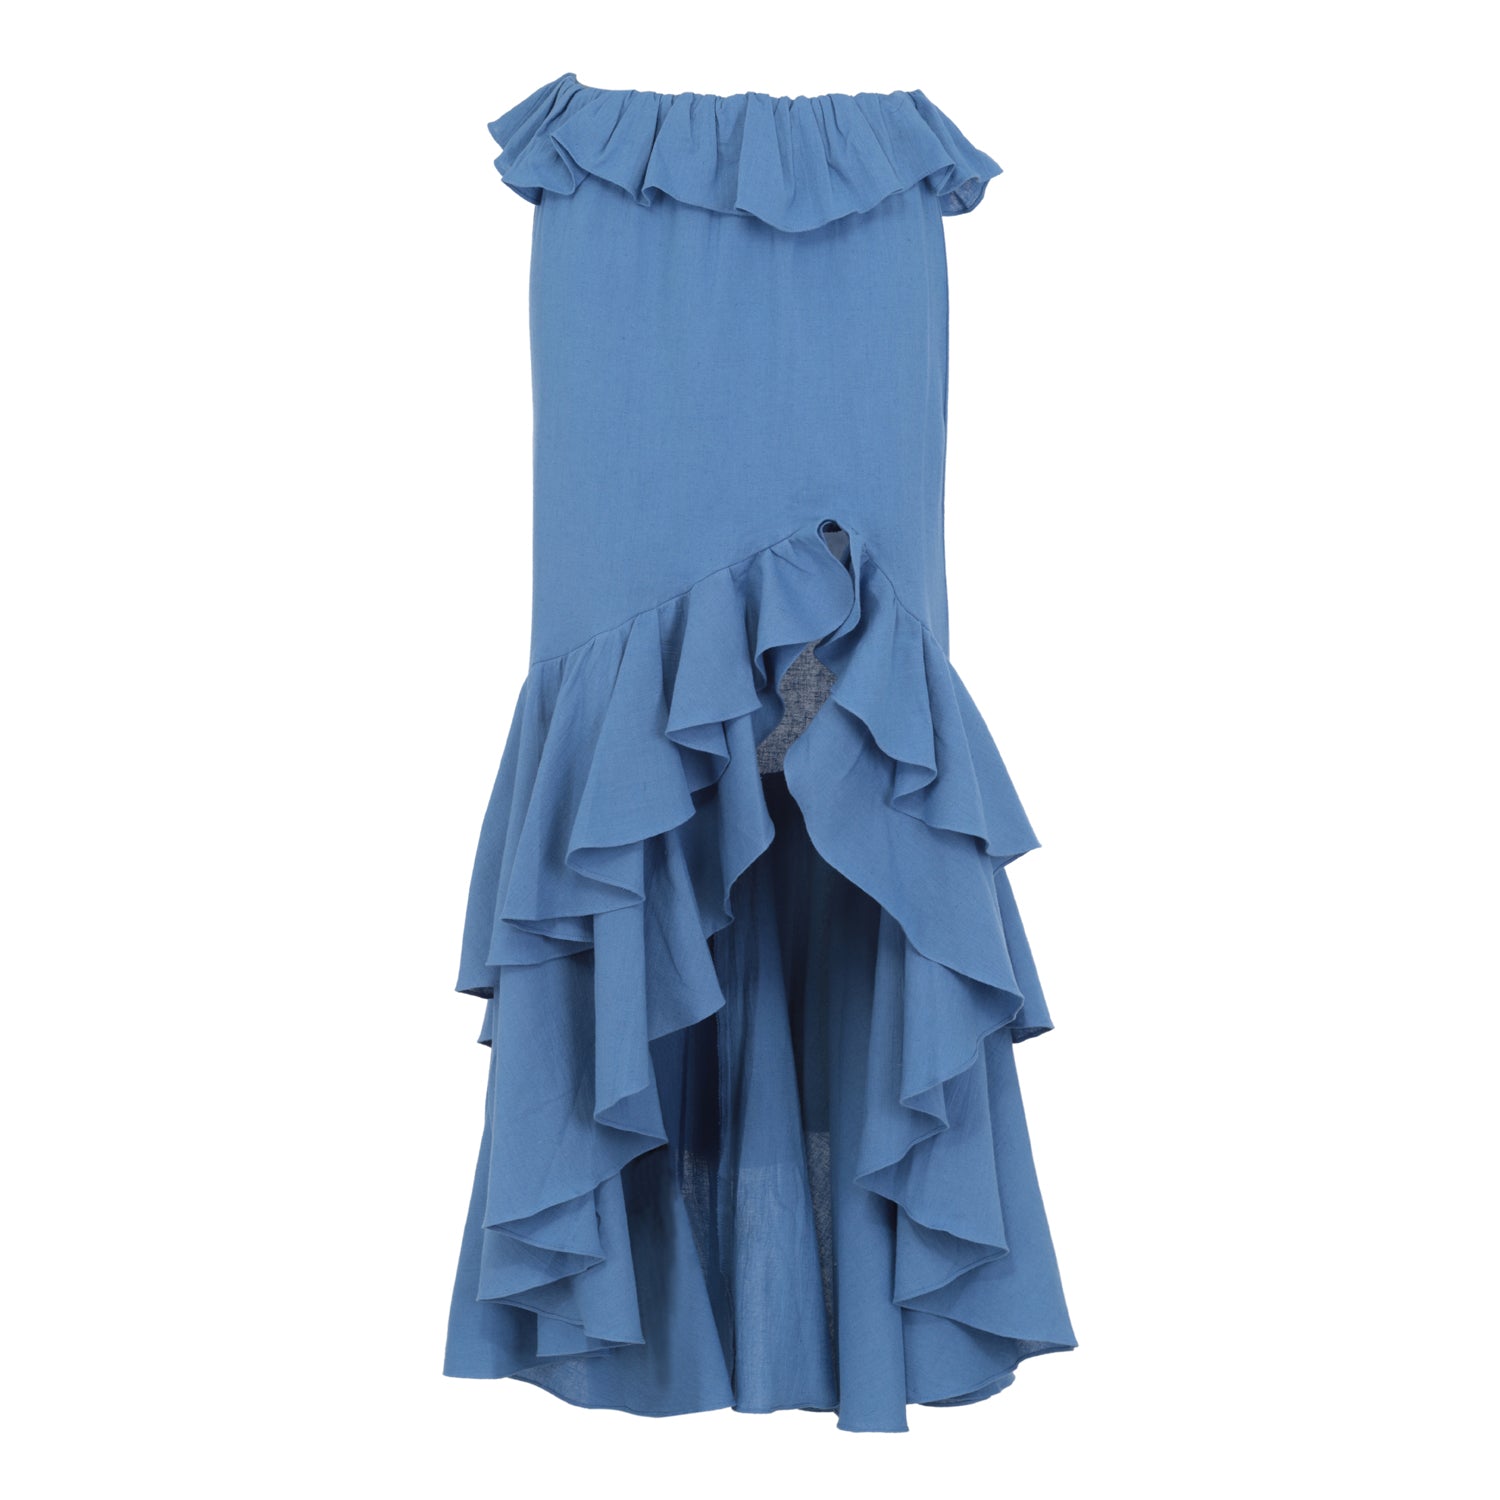 raina ruffled skirt in blue